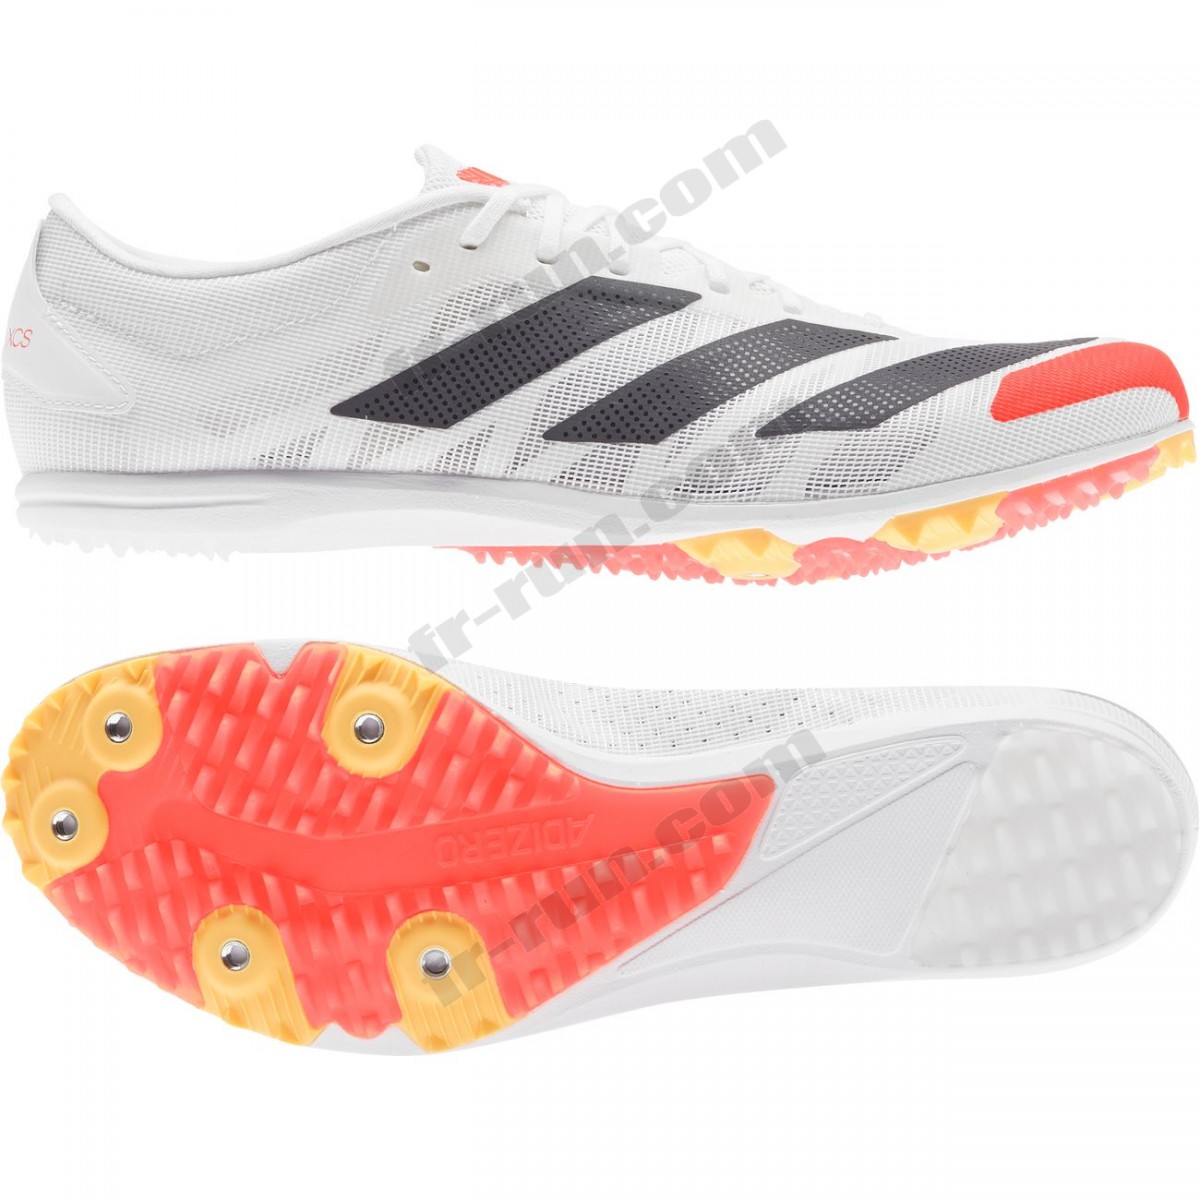 Adidas/Athlétisme adulte ADIDAS Chaussures adidas Adizero XCS √ Nouveau style √ Soldes - -3